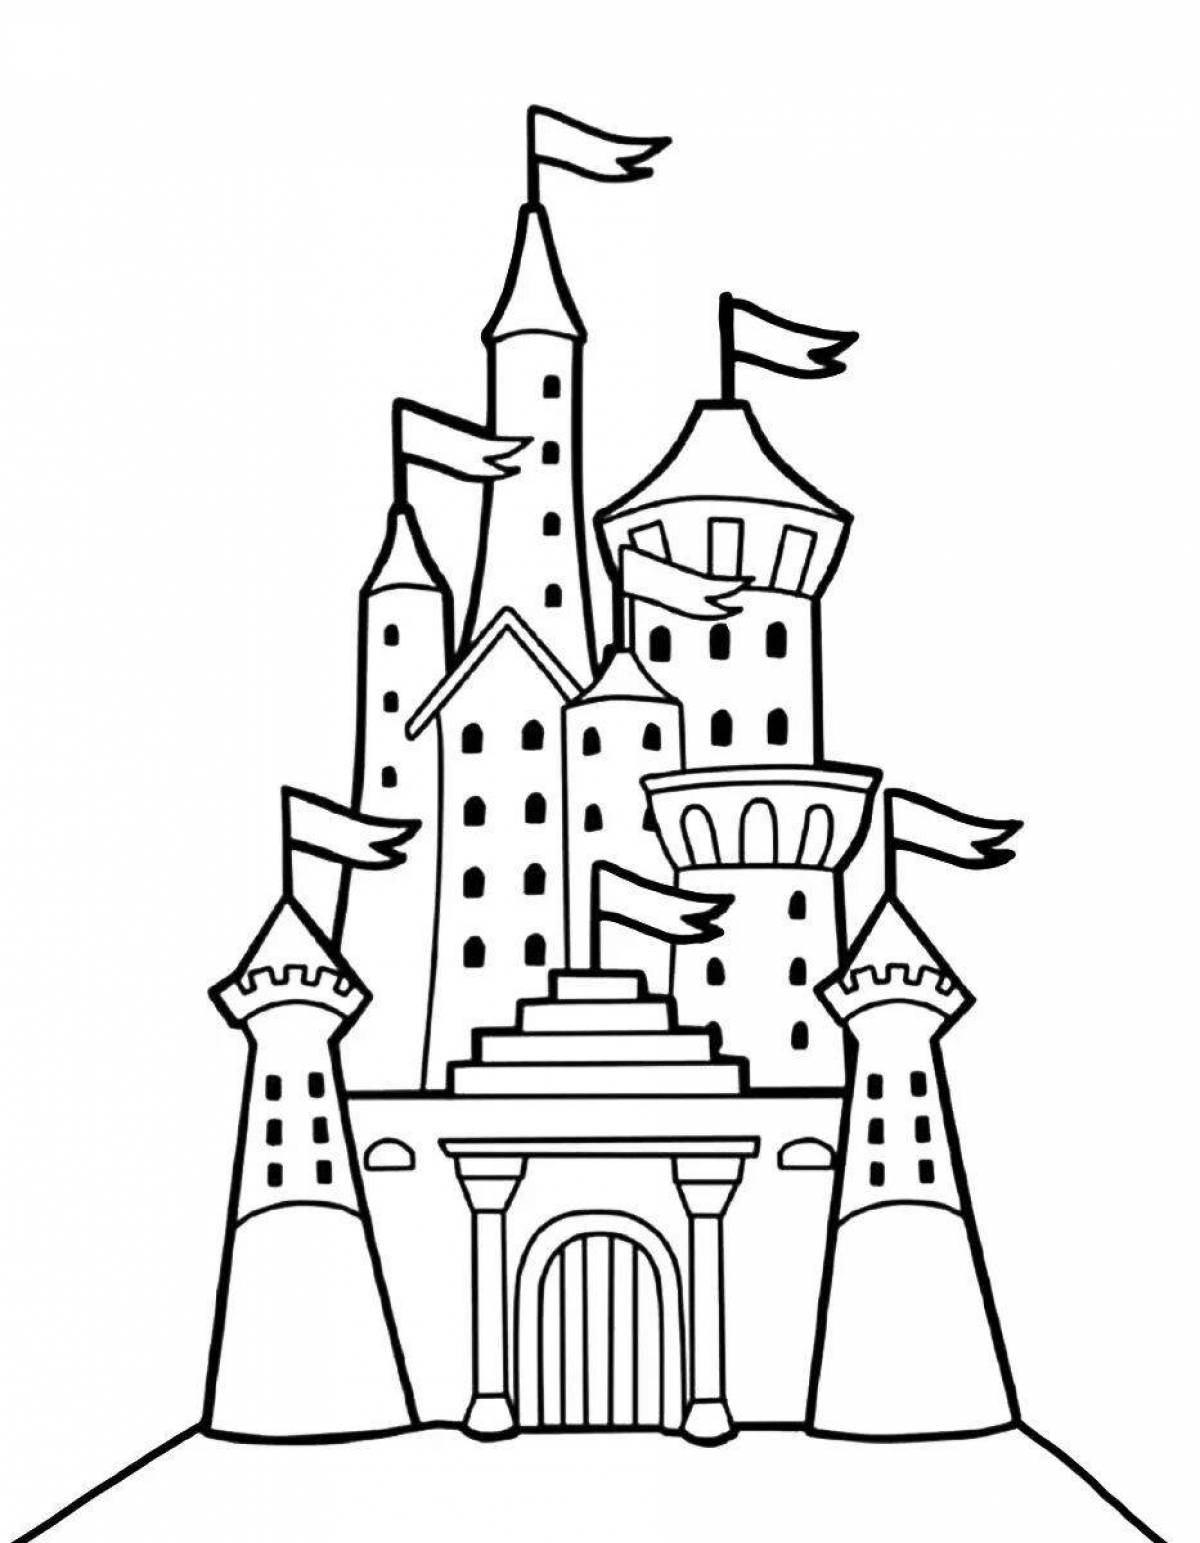 Coloring book big fairytale castle